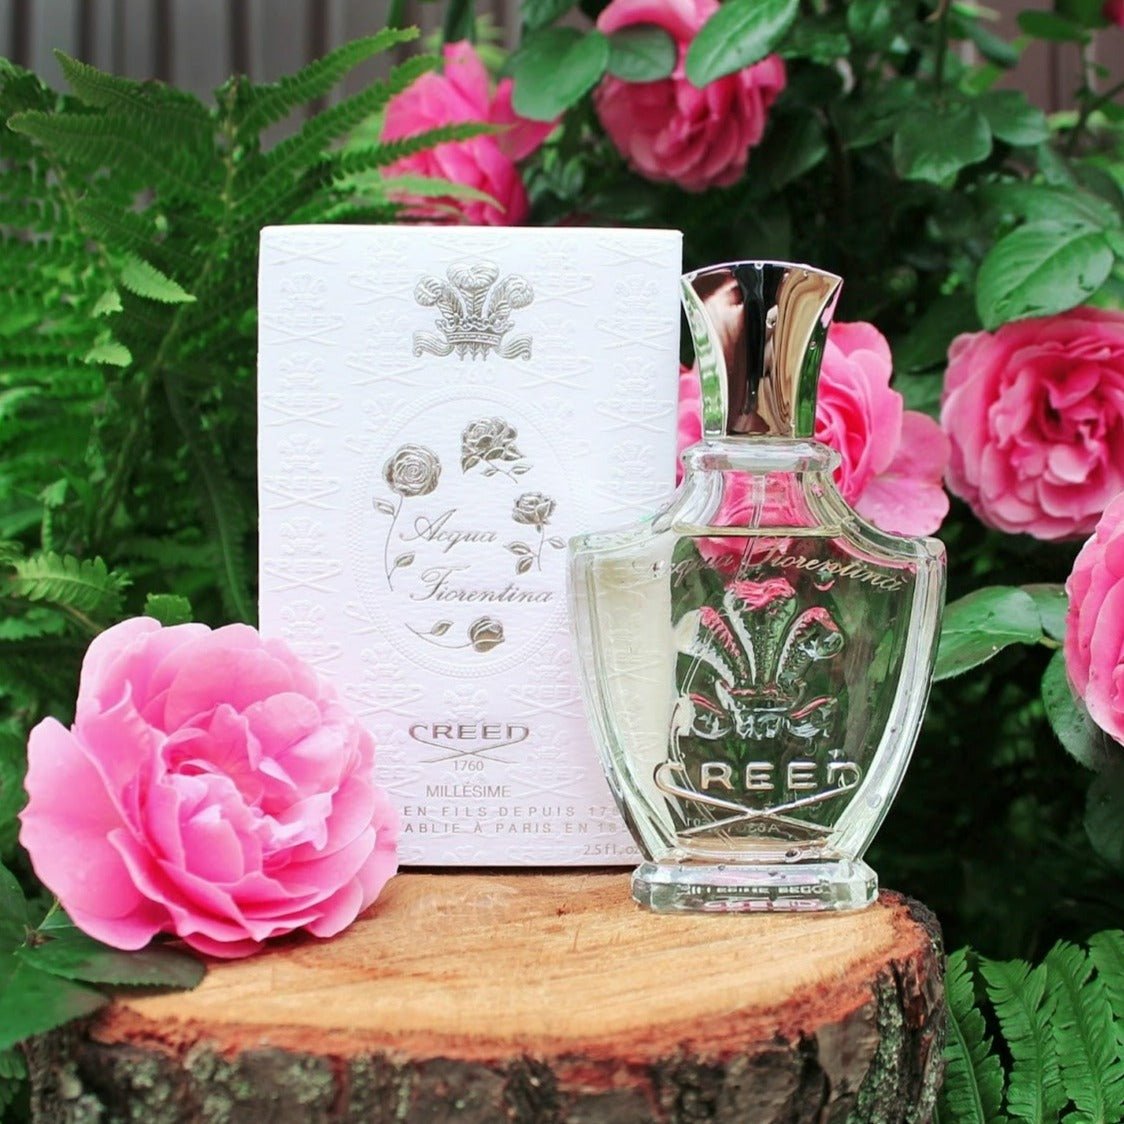 Creed Acqua Fiorentina EDP | My Perfume Shop Australia